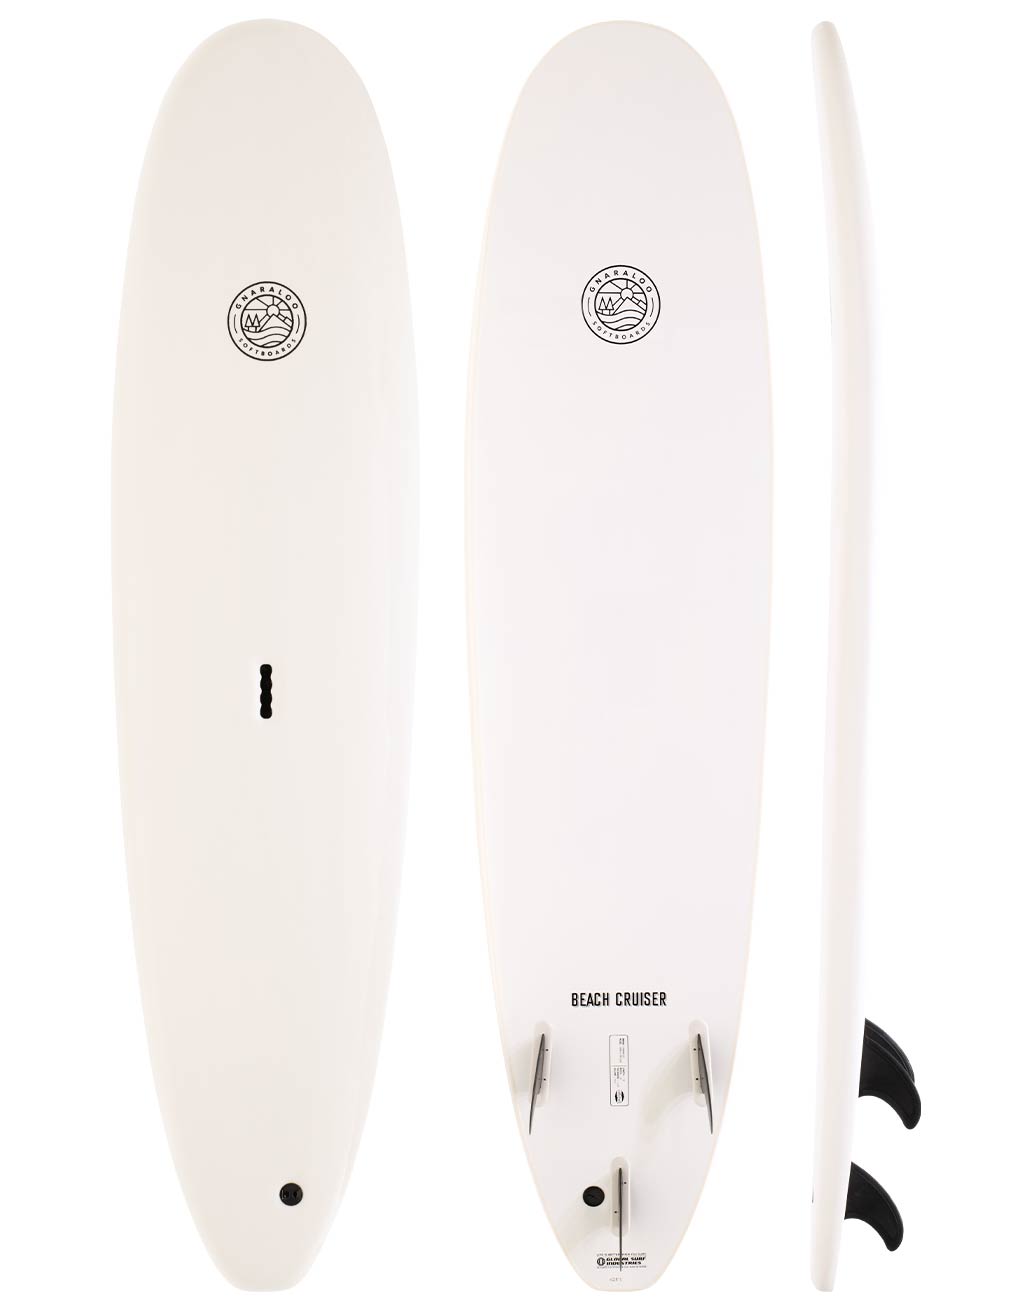 Gnaraloo soft surfboards - beach cruiser white surfboard